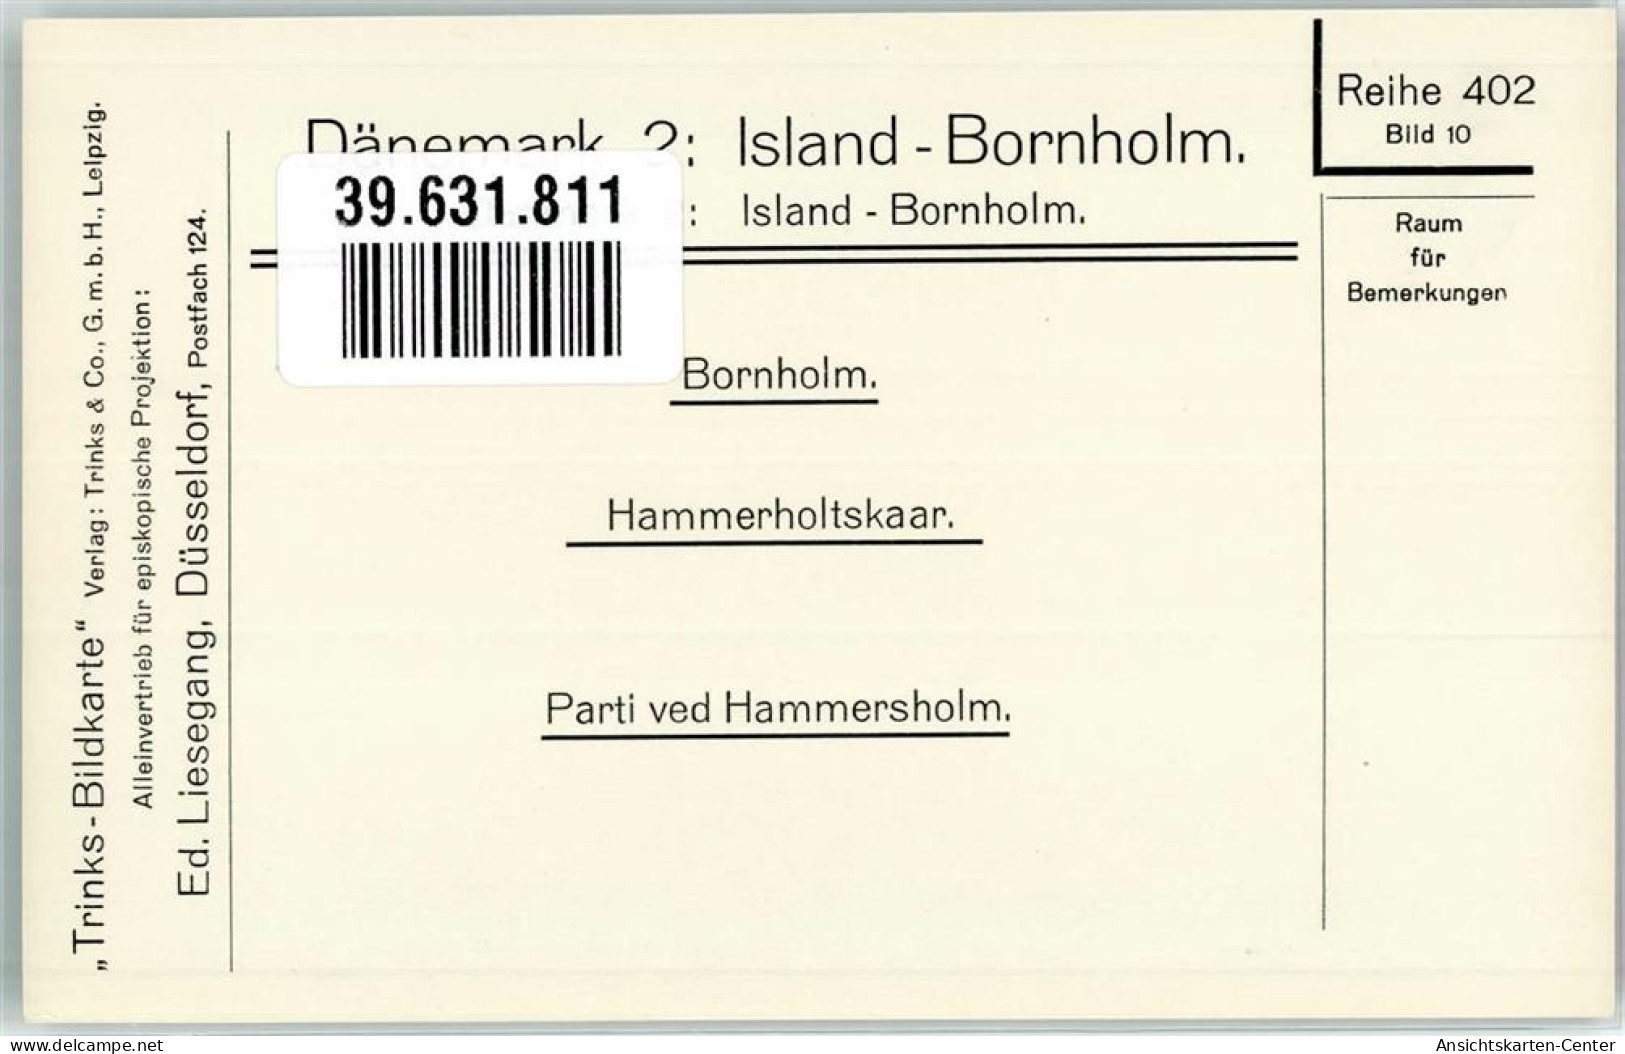 39631811 - Bornholm - Danemark